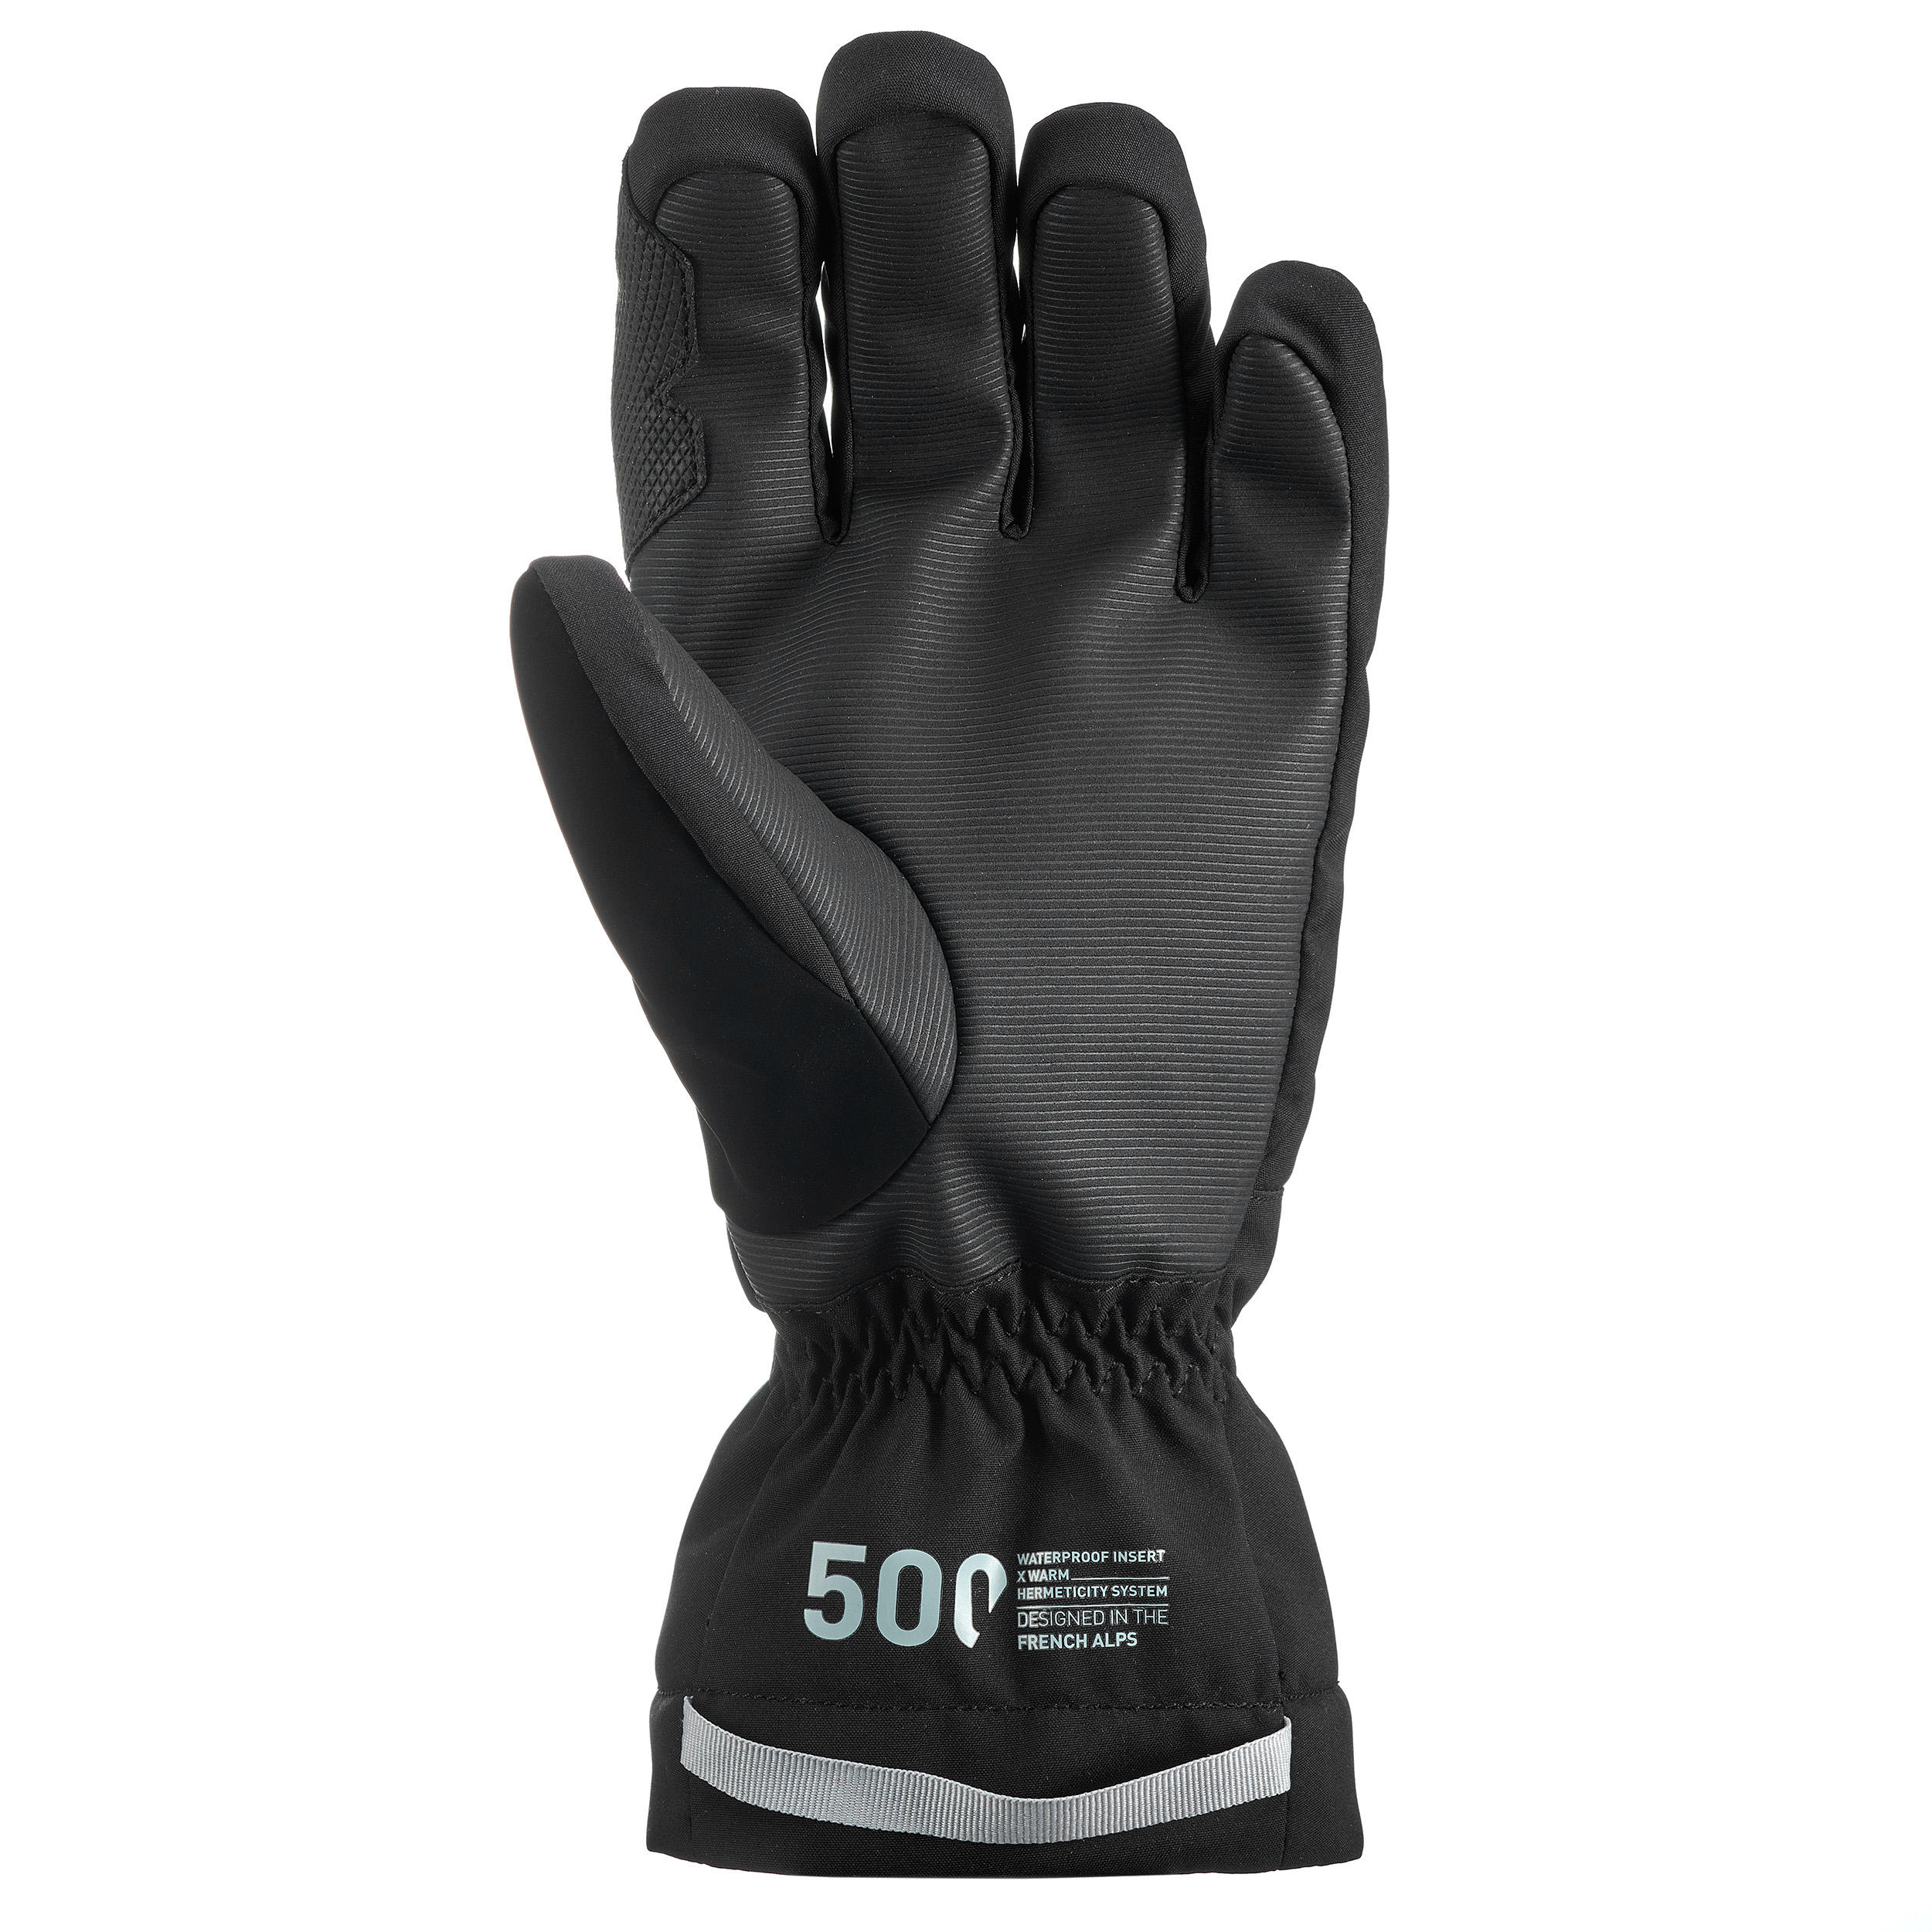 Warm Waterproof Ski Gloves - Ski 500 Black - WEDZE